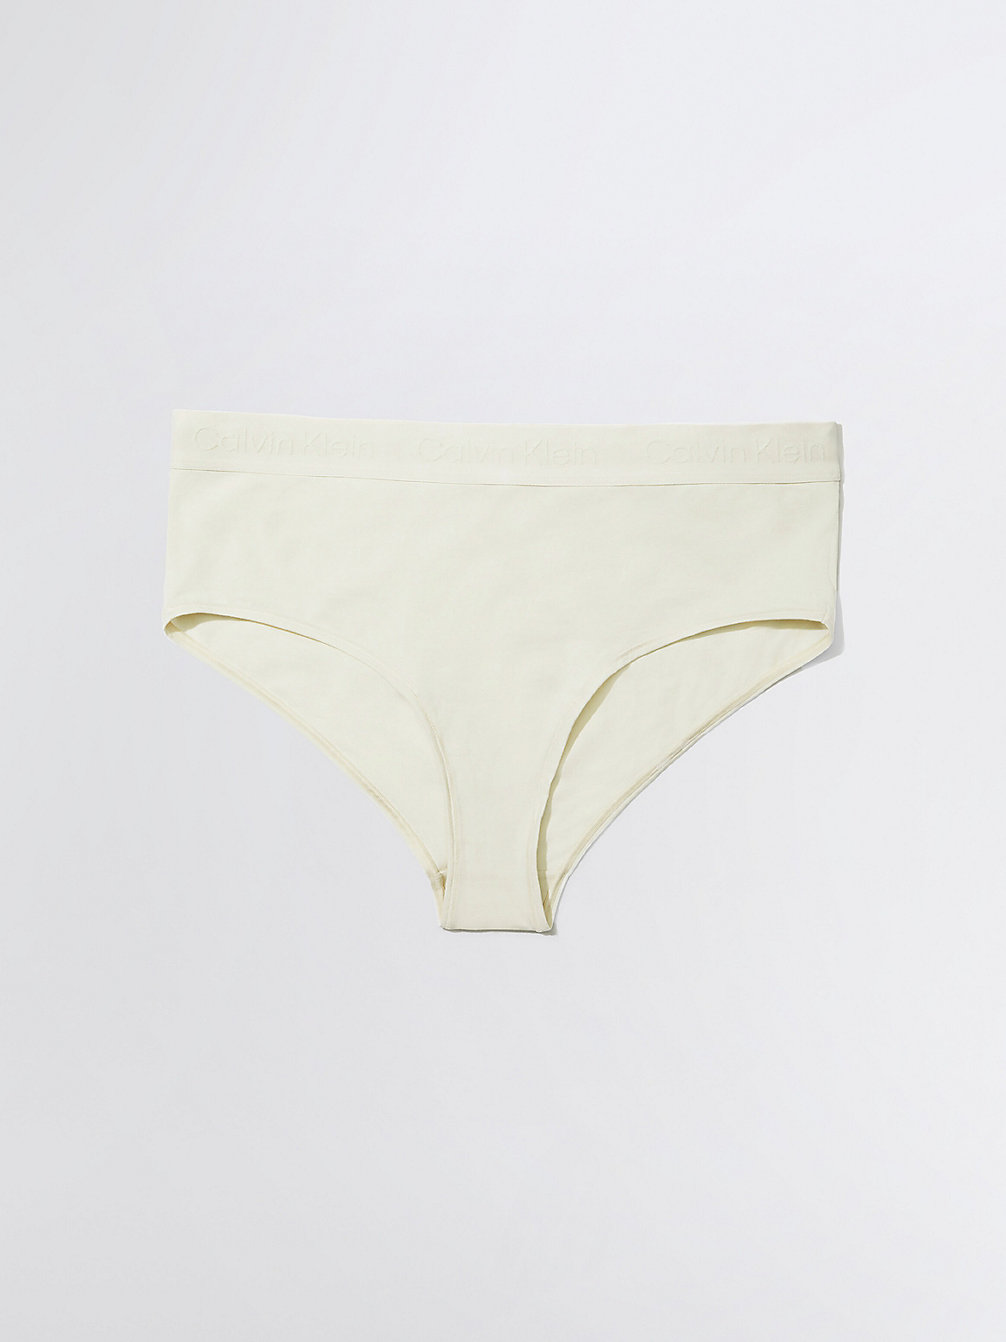 BONE WHITE Plus Size Hipster Panty - CK Standards undefined women Calvin Klein